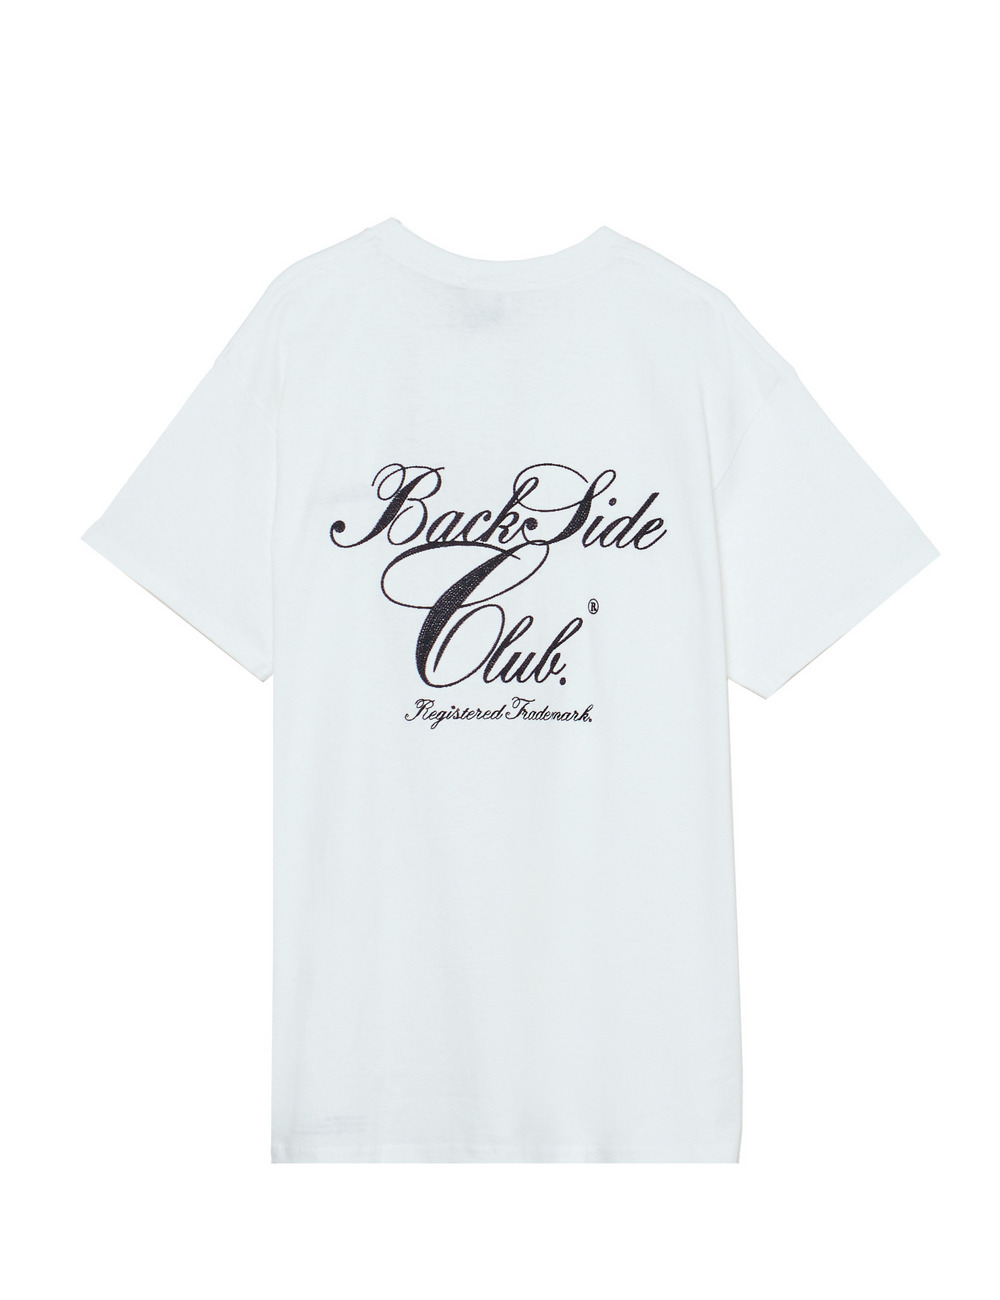 【MEN】BACKSIDE CLUB ロゴ刺繍Tシャツ 詳細画像 ホワイト 2